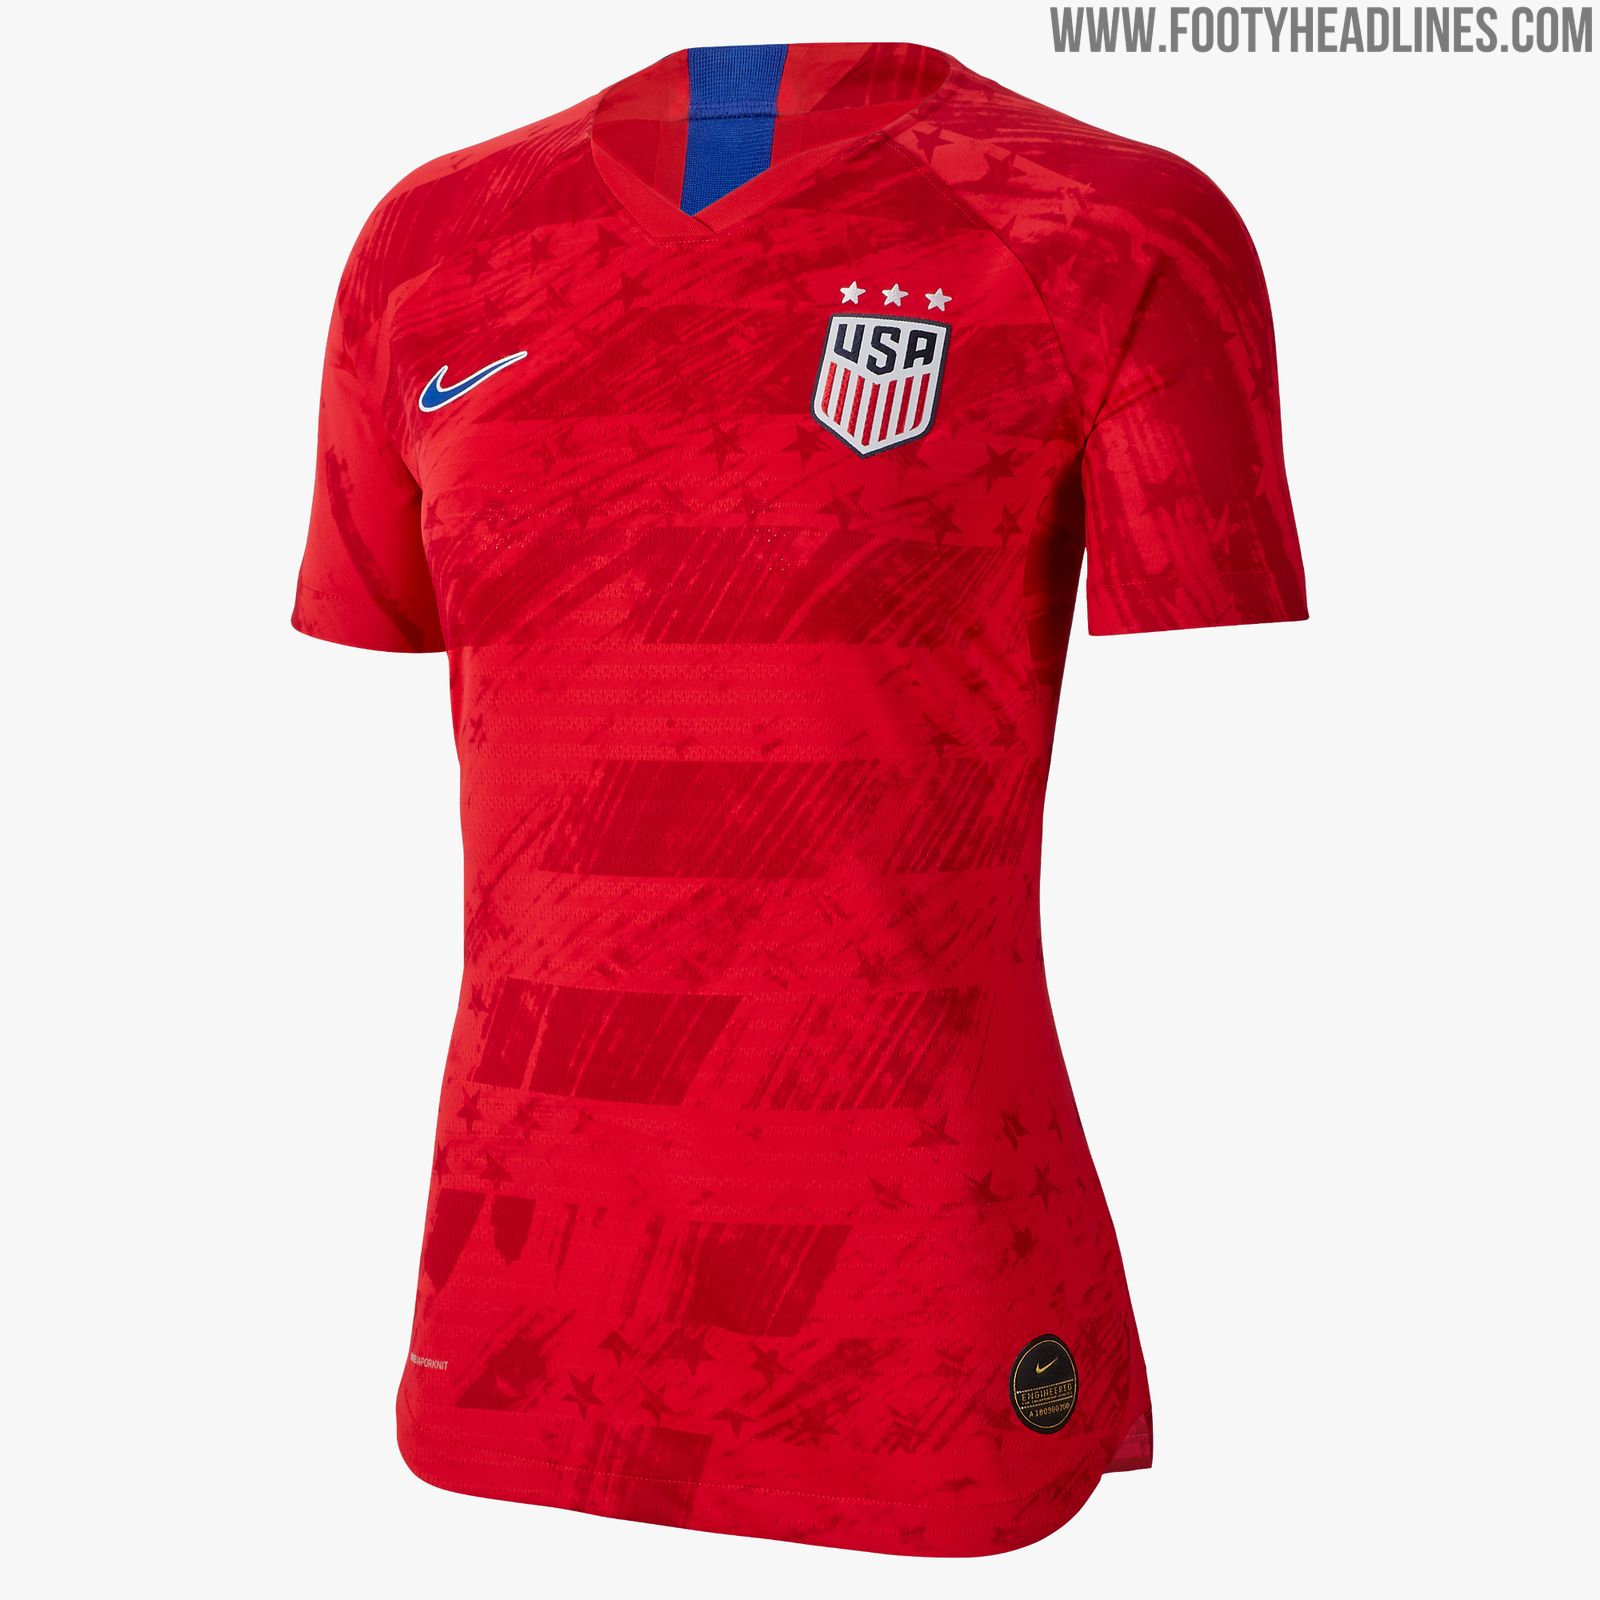 Nike USA 2019 Women's World Cup Away Kit Released  Footy Headlines